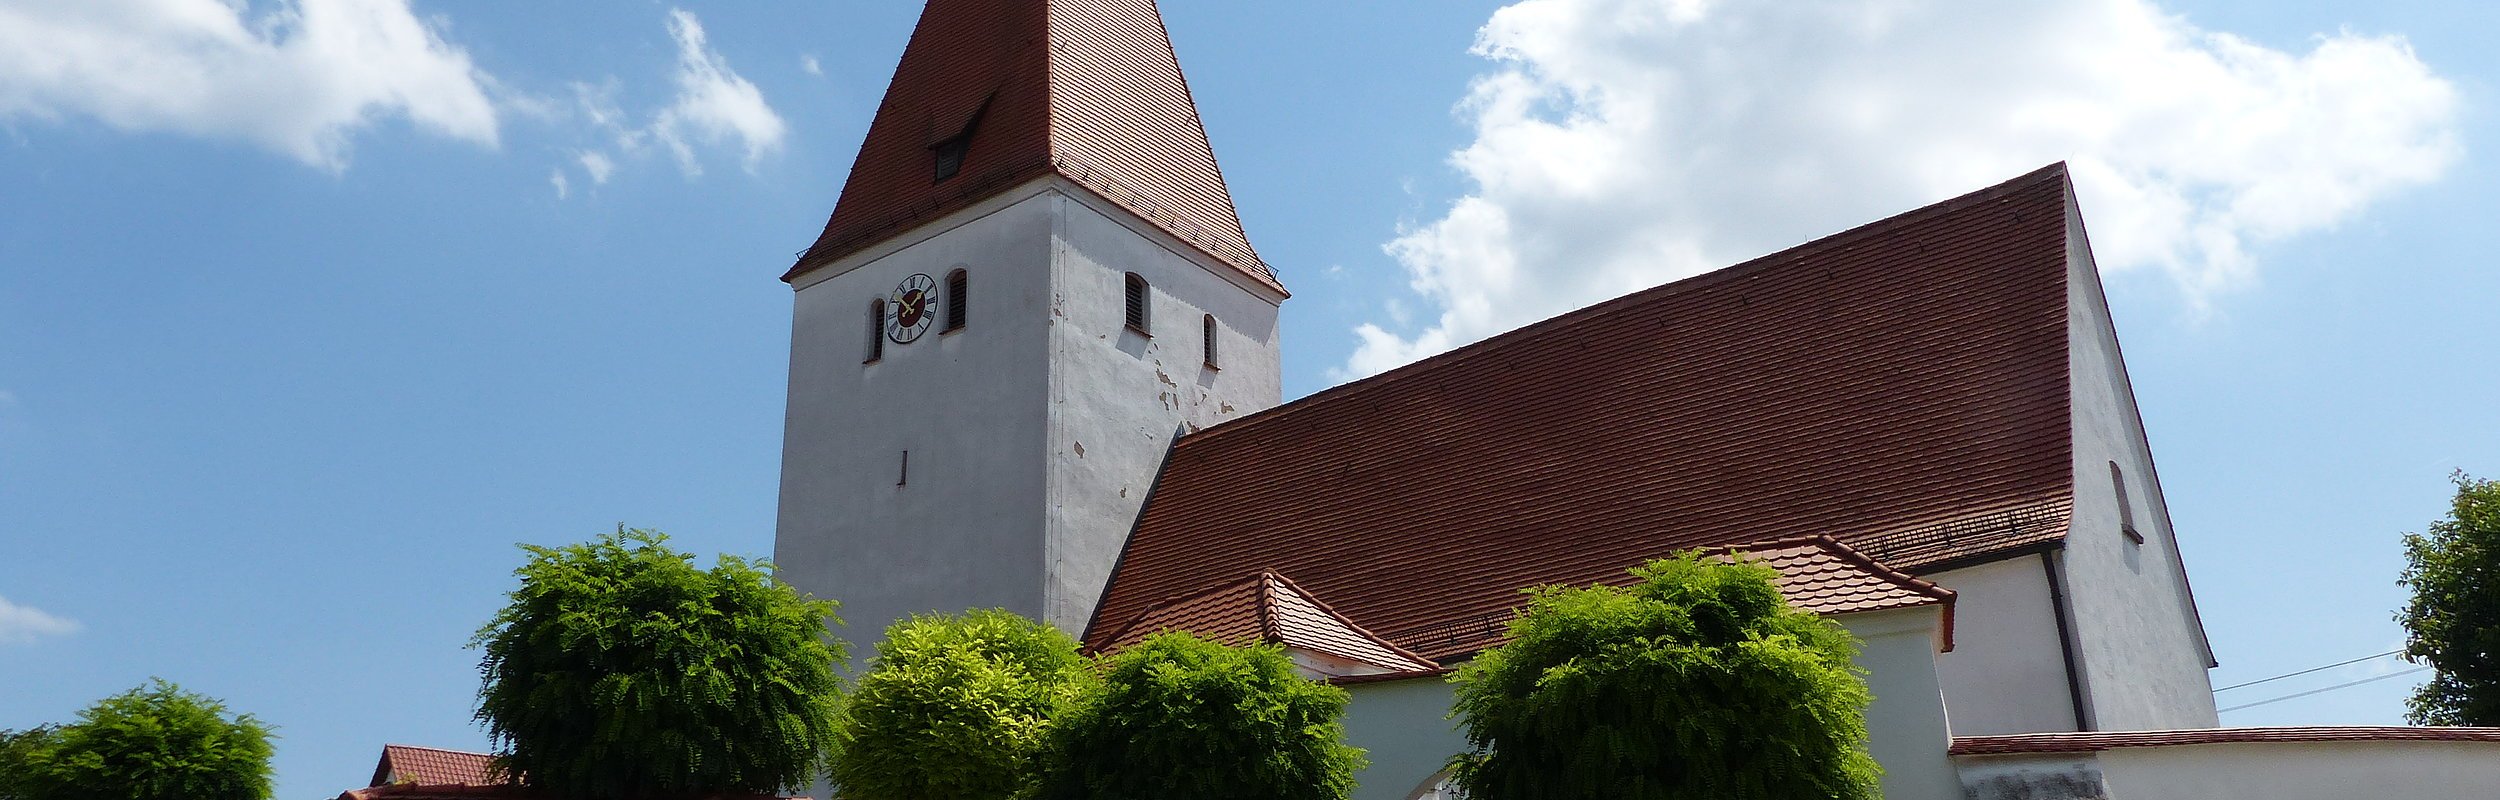 Pfarrkirche Mariä Himmelfahrt Flotzheim